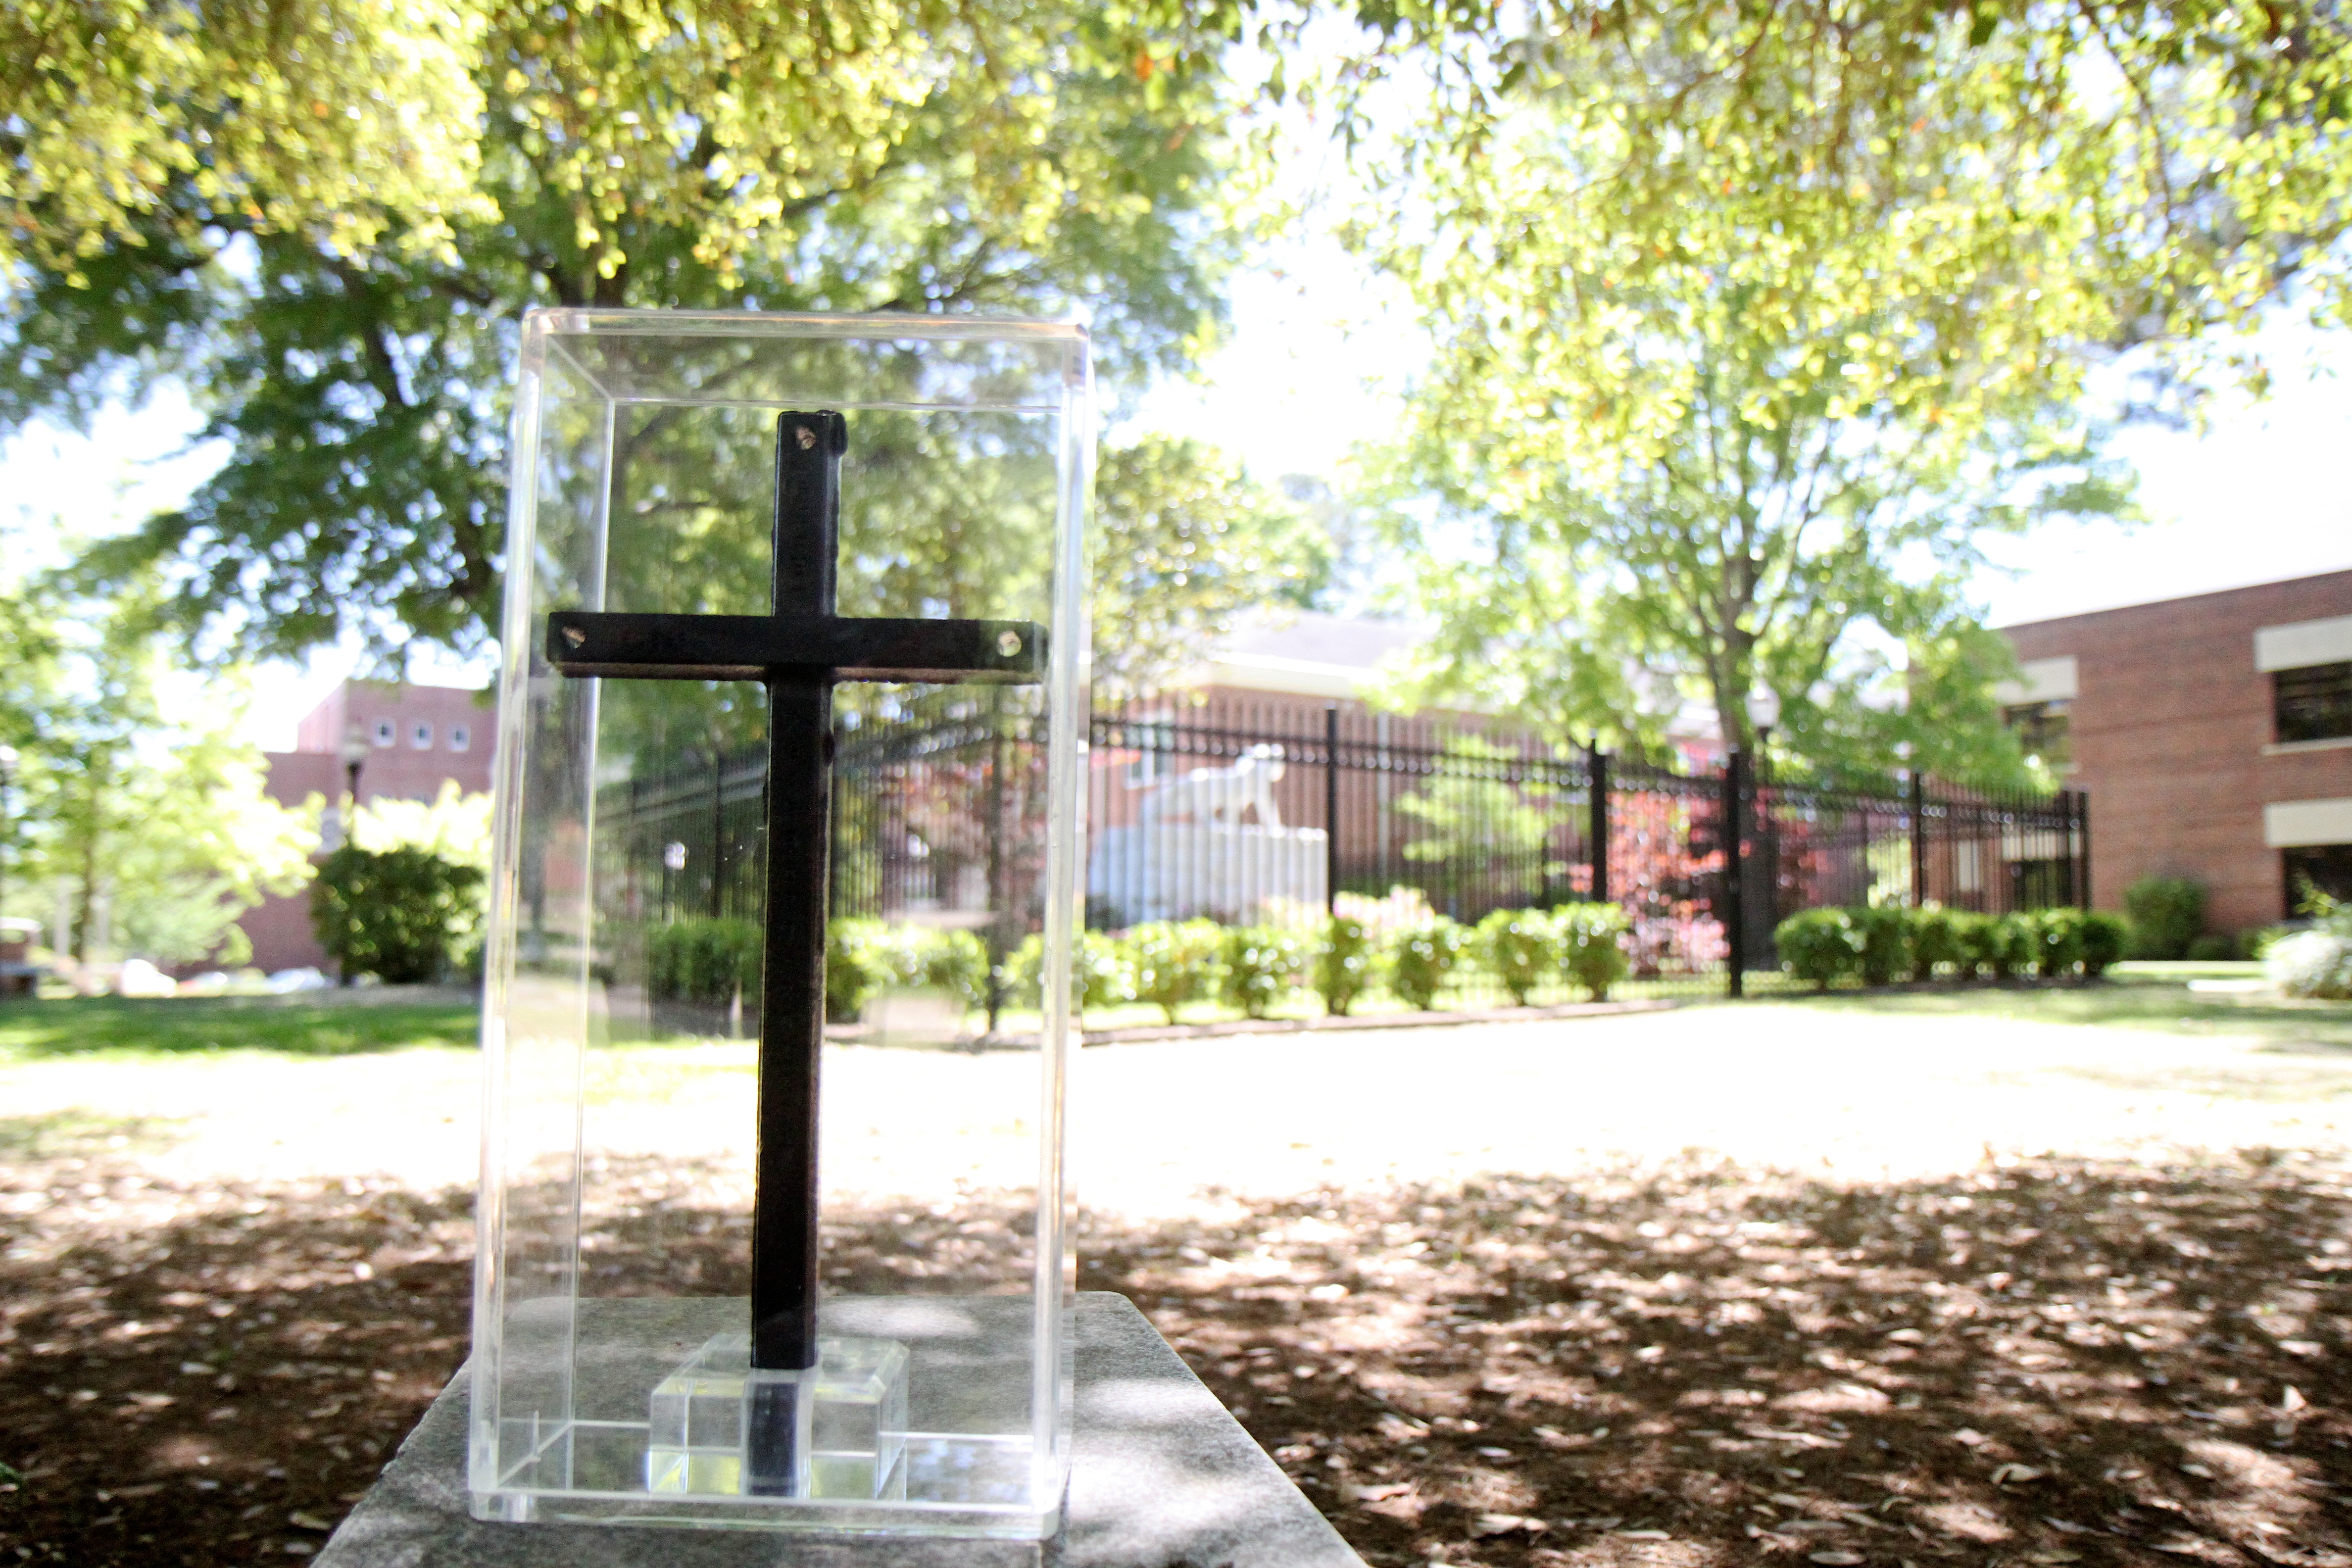 Nagasaki Cross on display at Ouachita reflects call for cultural, spiritual peace.